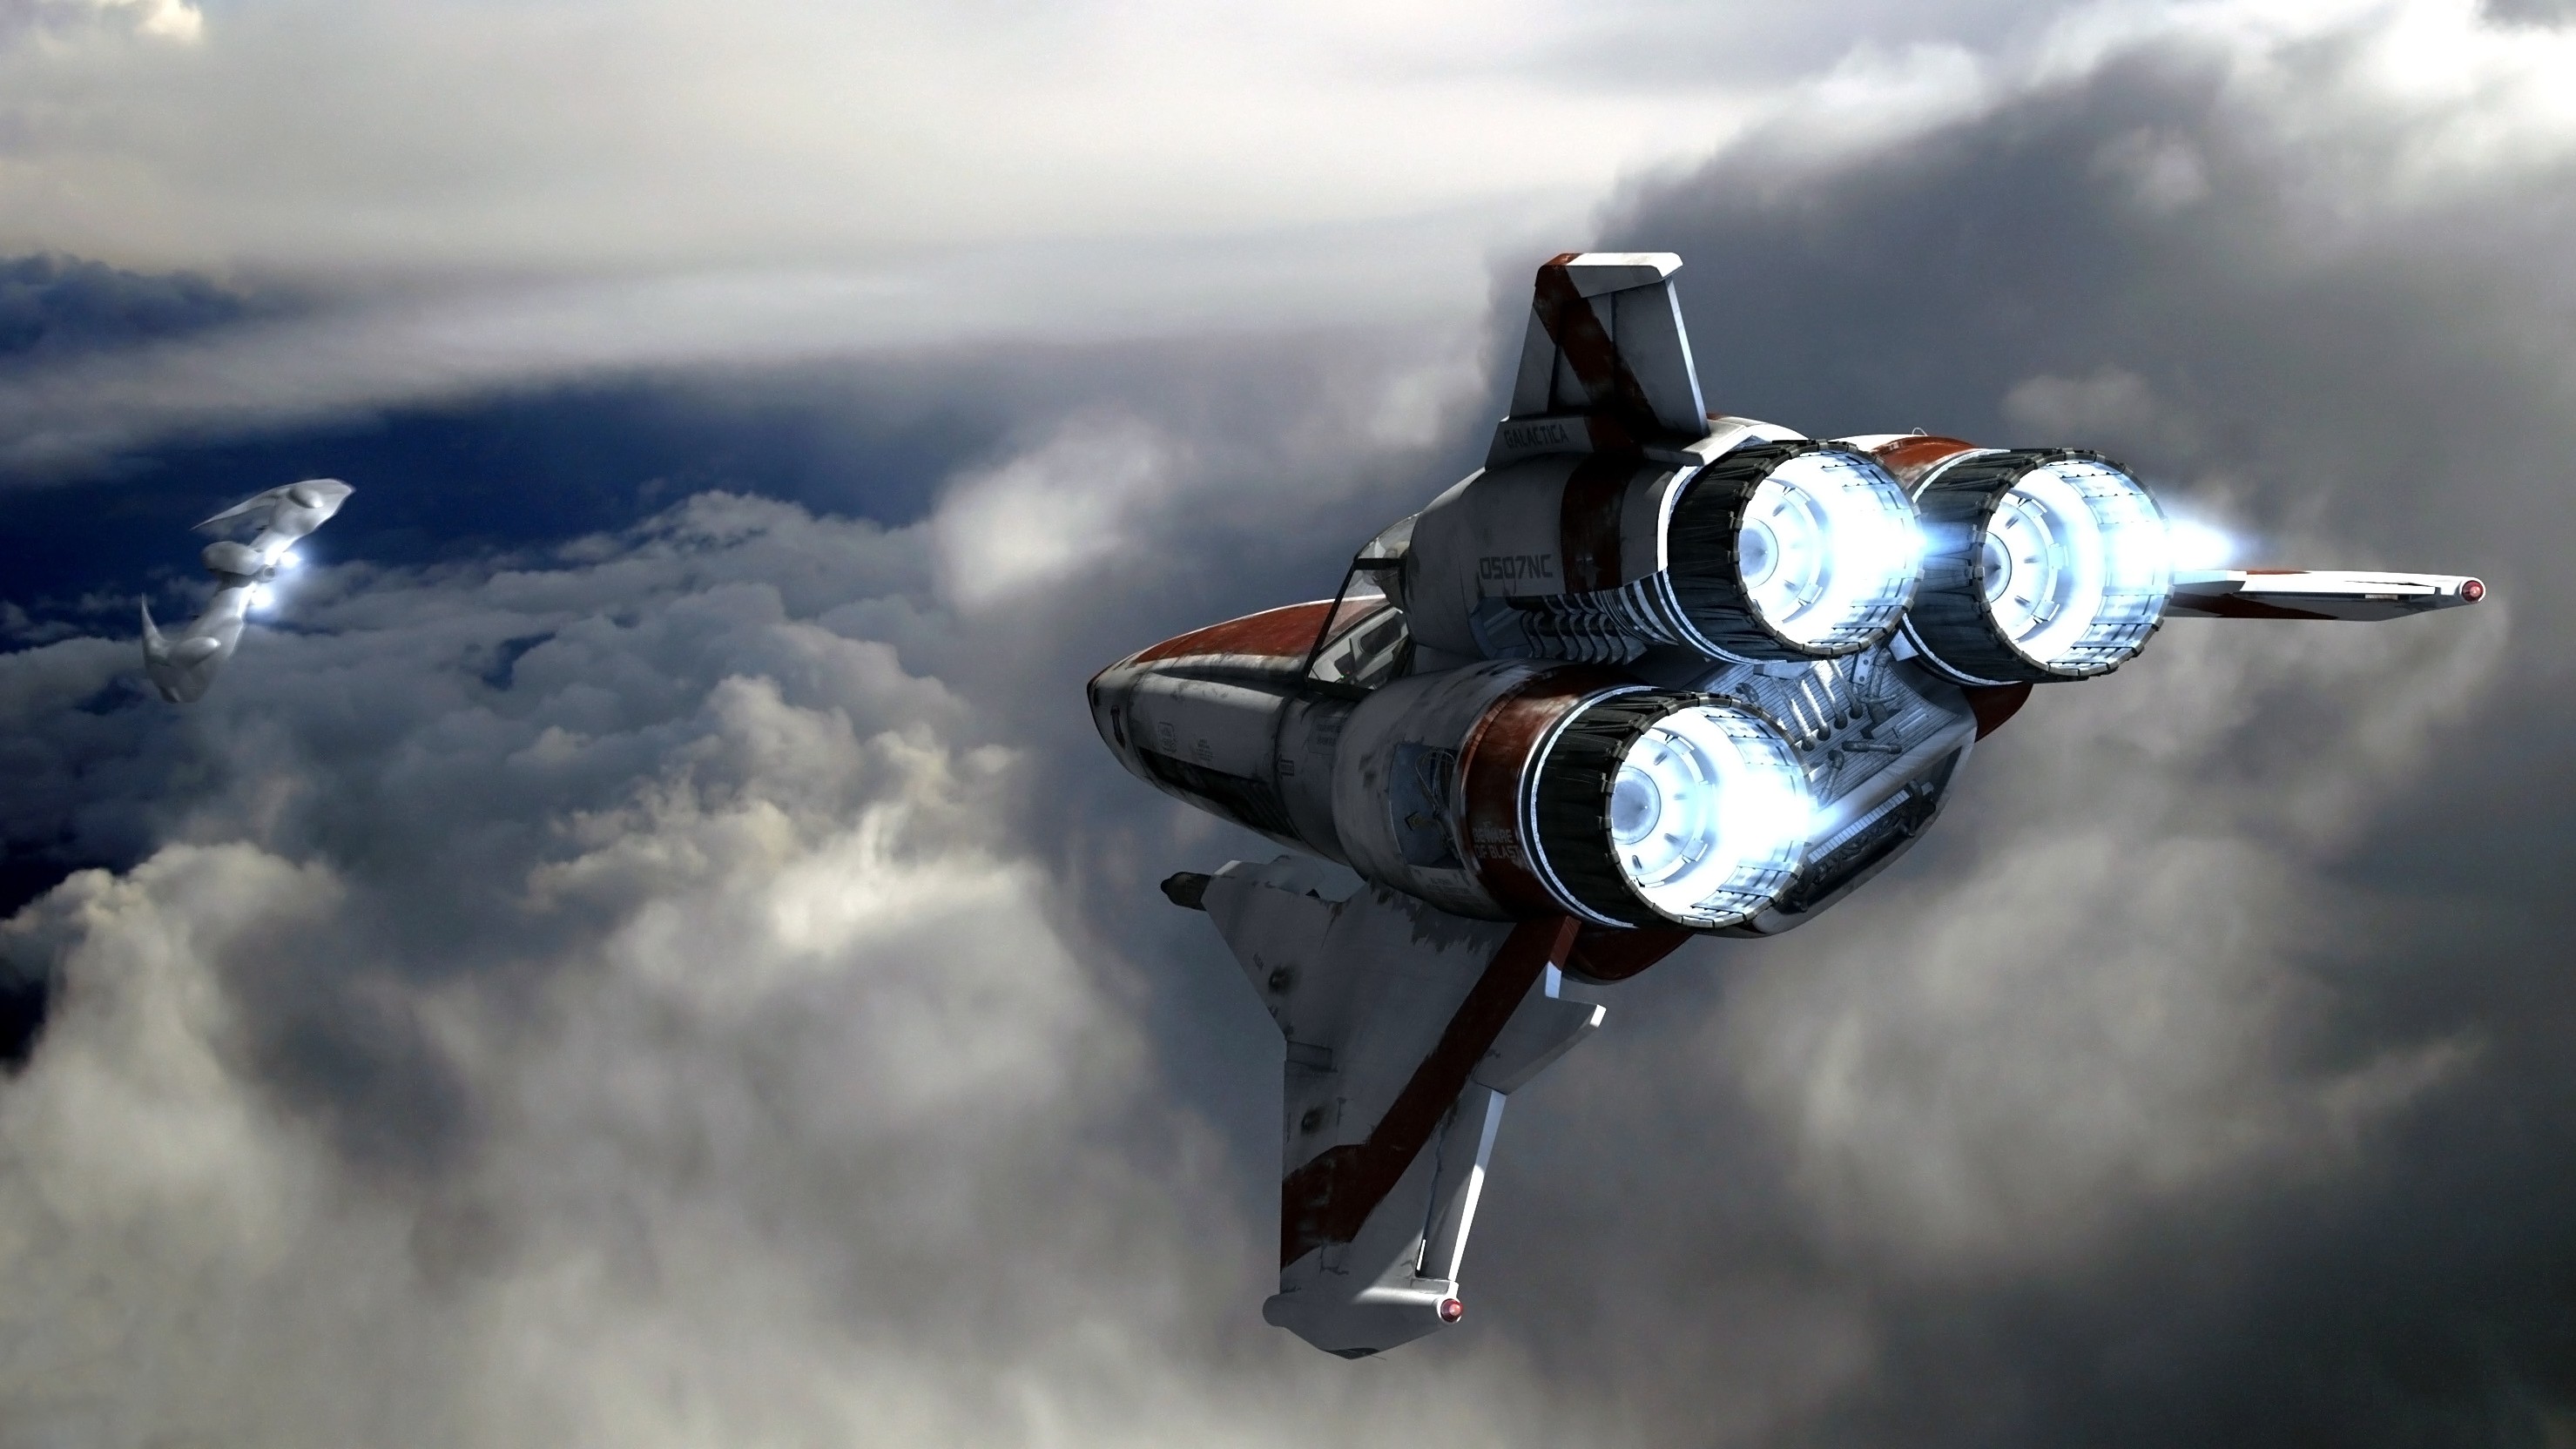 Battlestar Galactica, Spaceship, Cylons, Digital Art, Futuristic, Clouds, Sky, Science Fiction Wallpaper